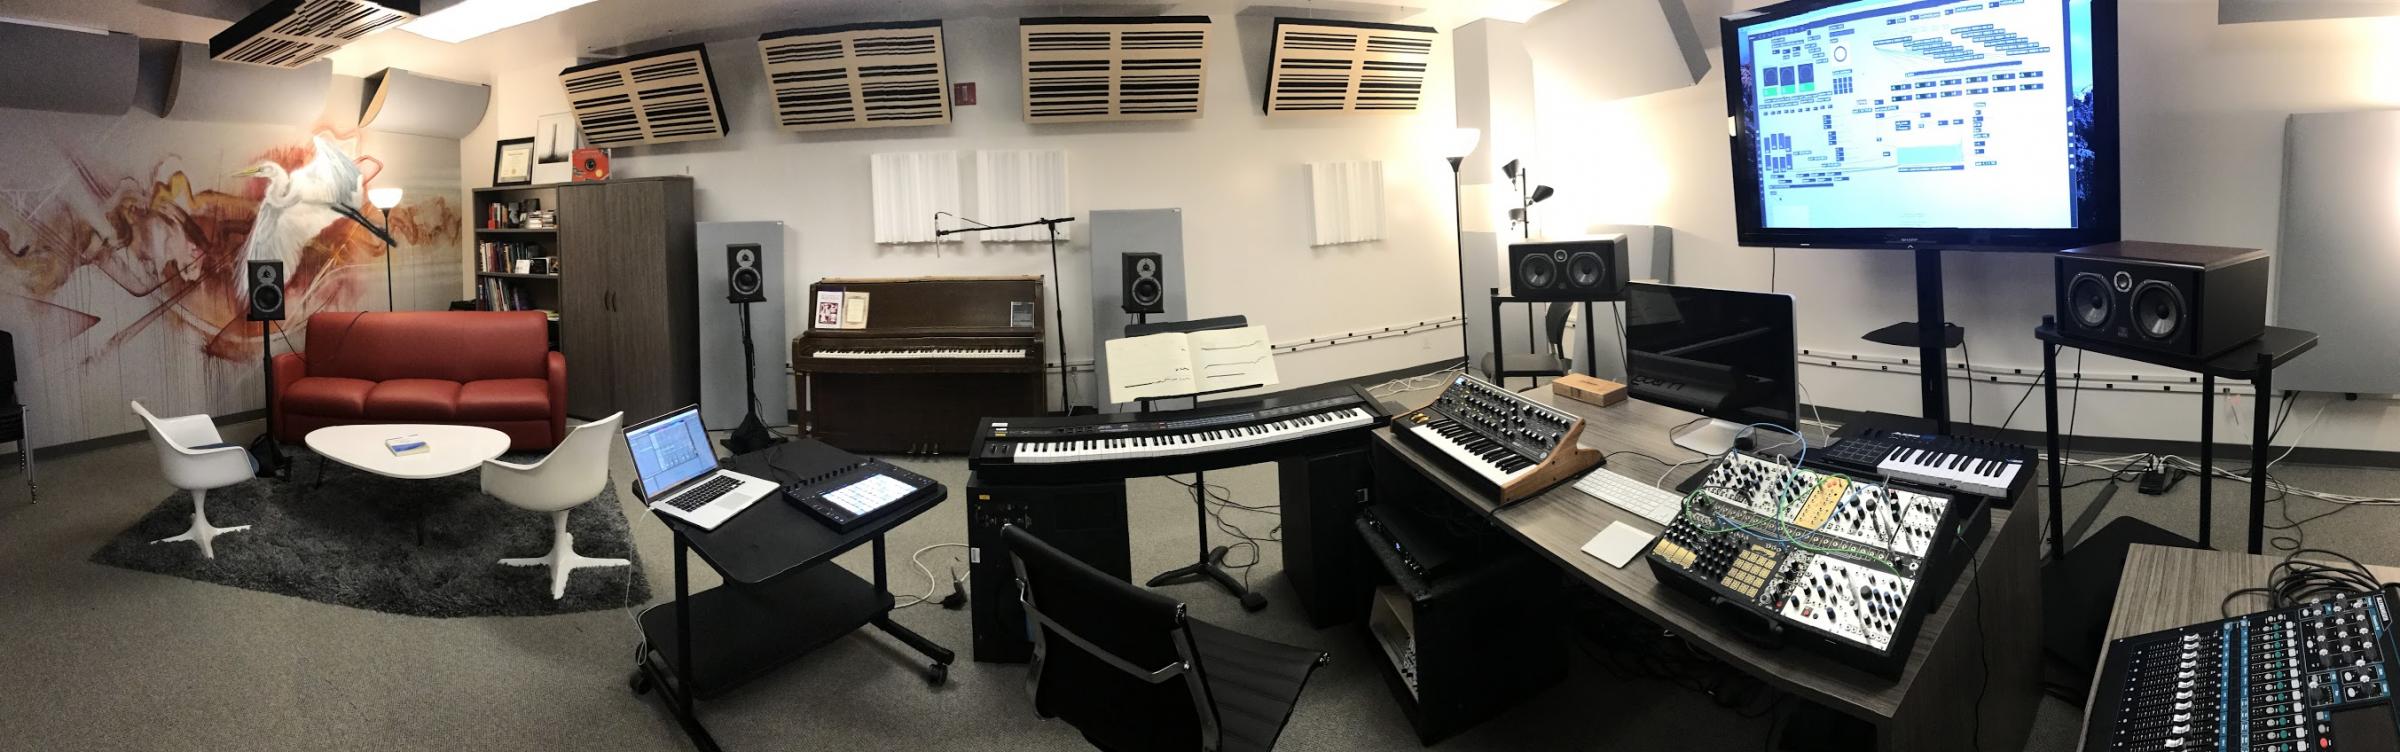 Electronic music studio on campus